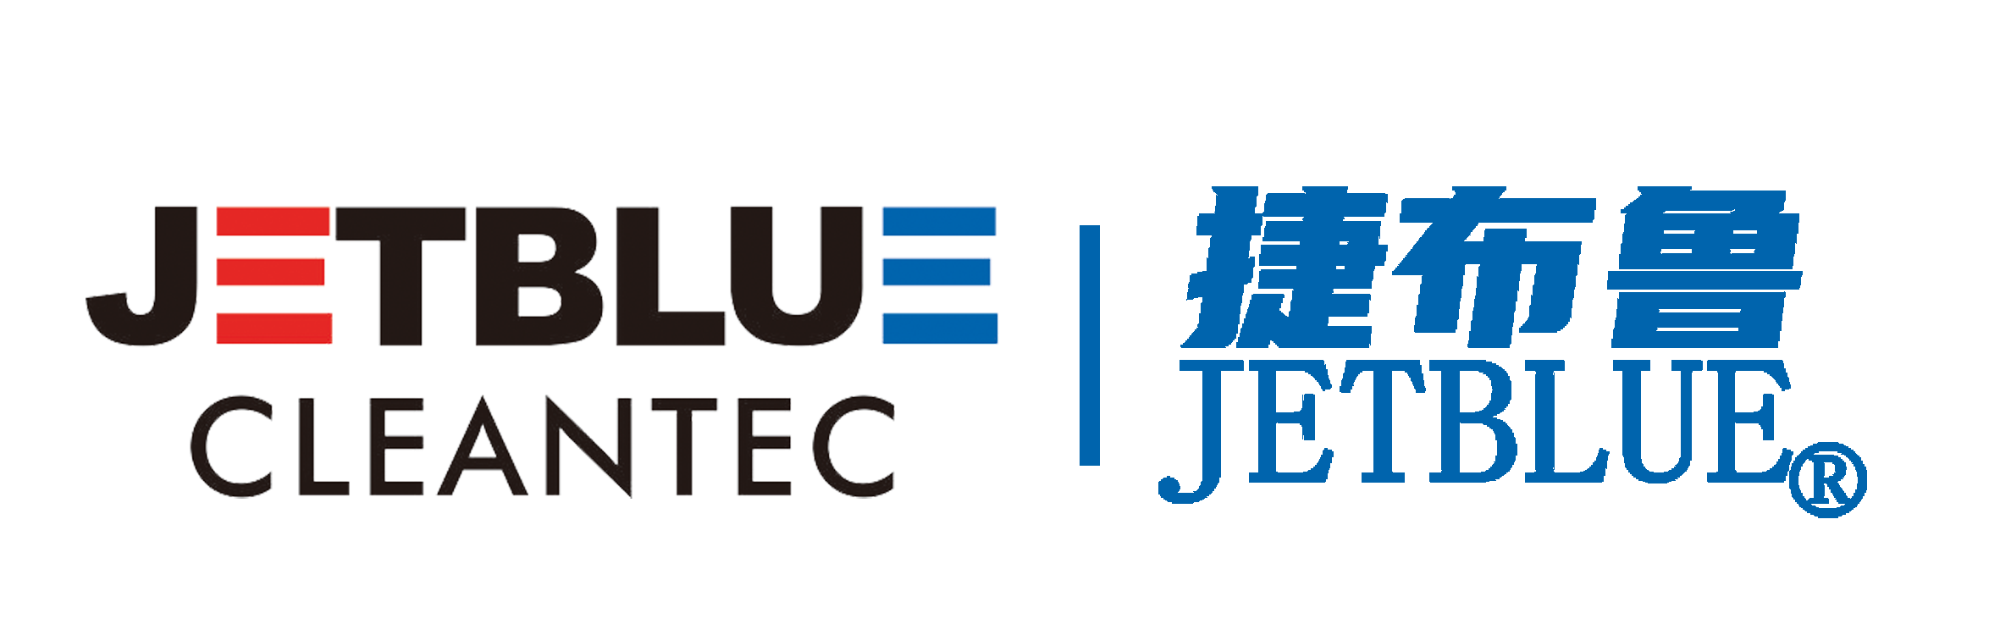 Jetblue CleanTec